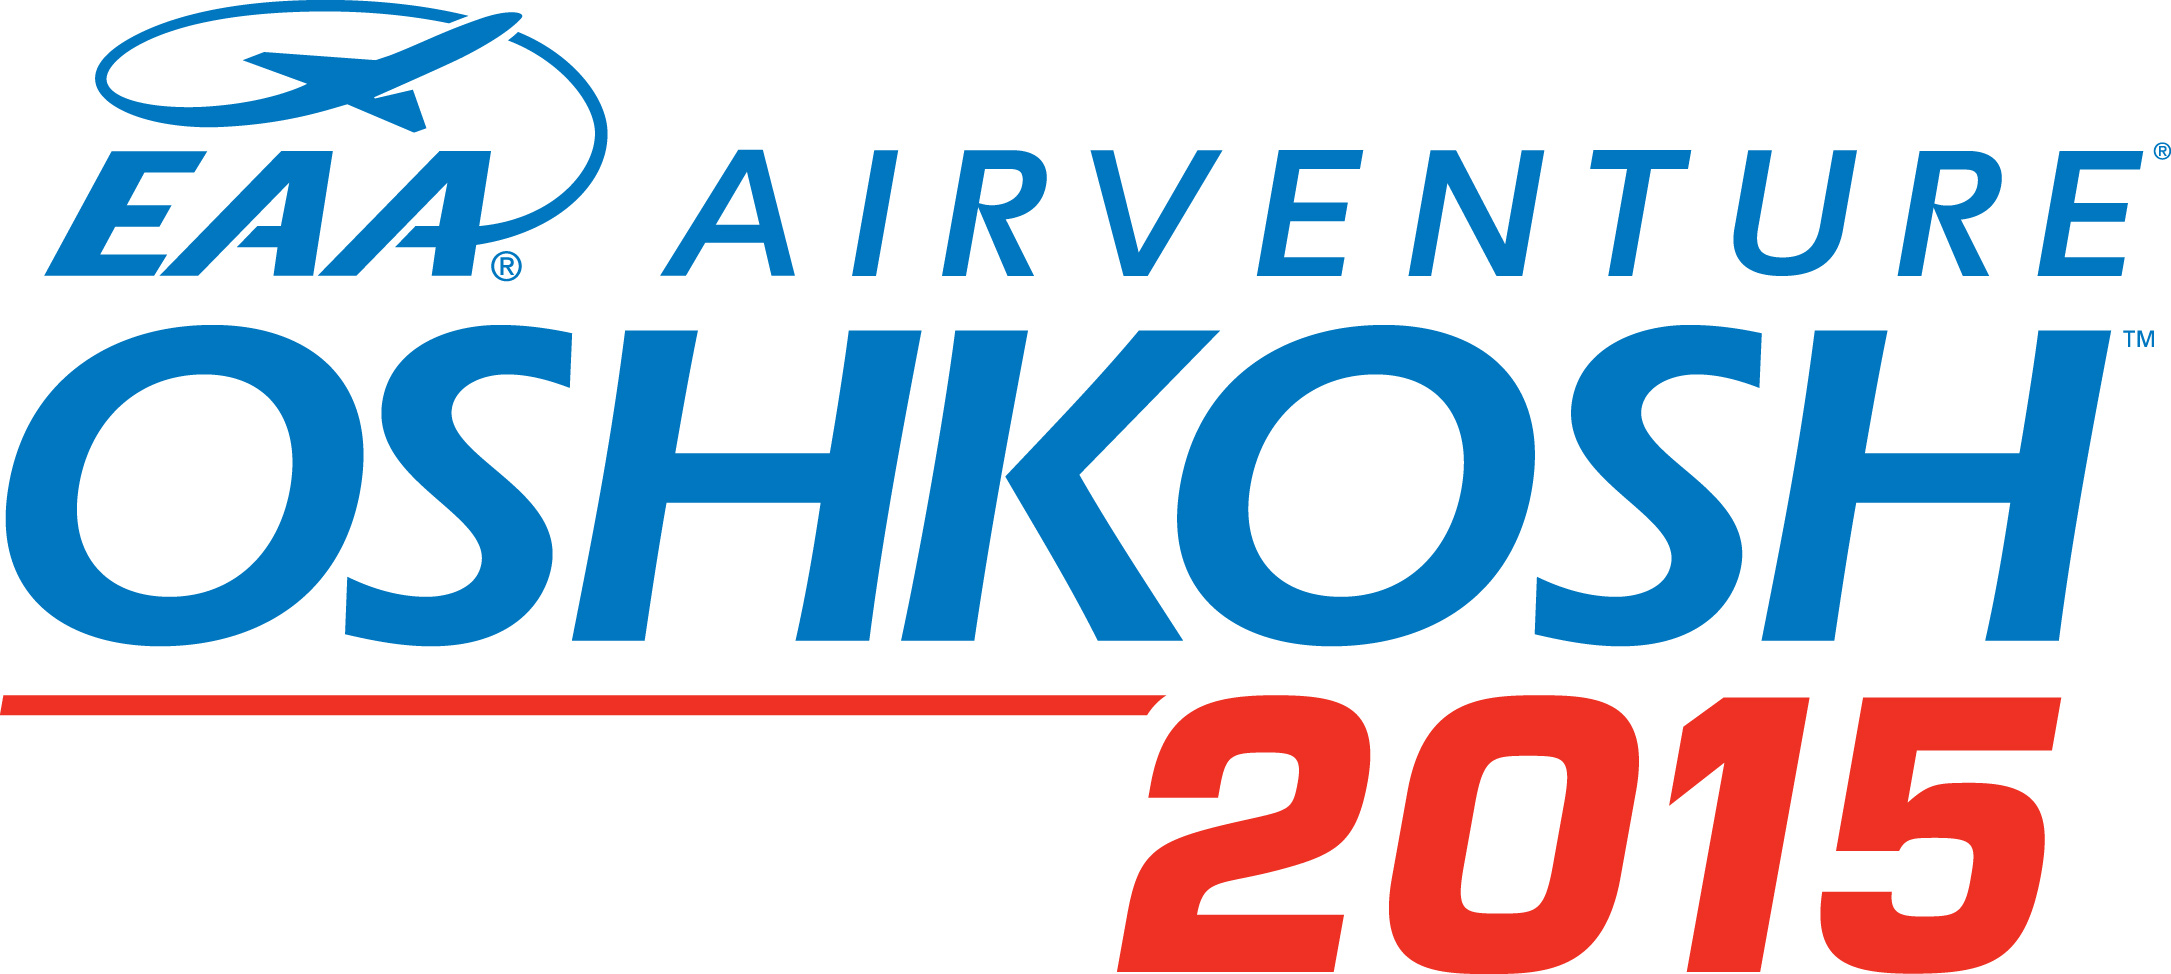 EAA AirVenture Oshkosh 2015 logo (editorial use only)